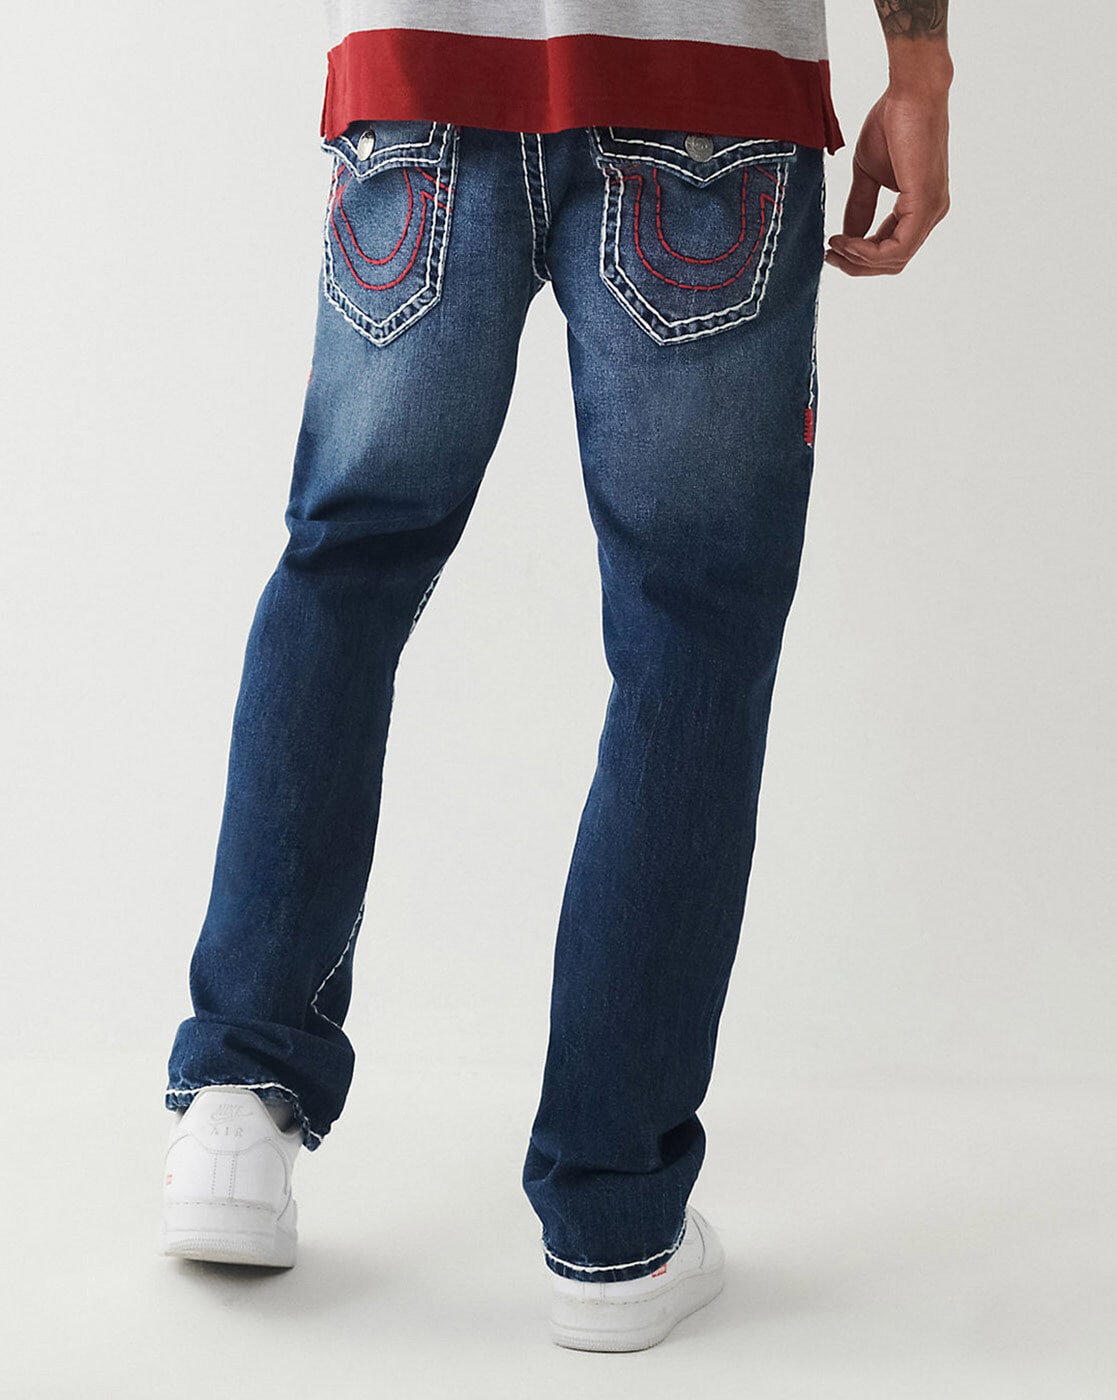 New True Religion Denim Jeans